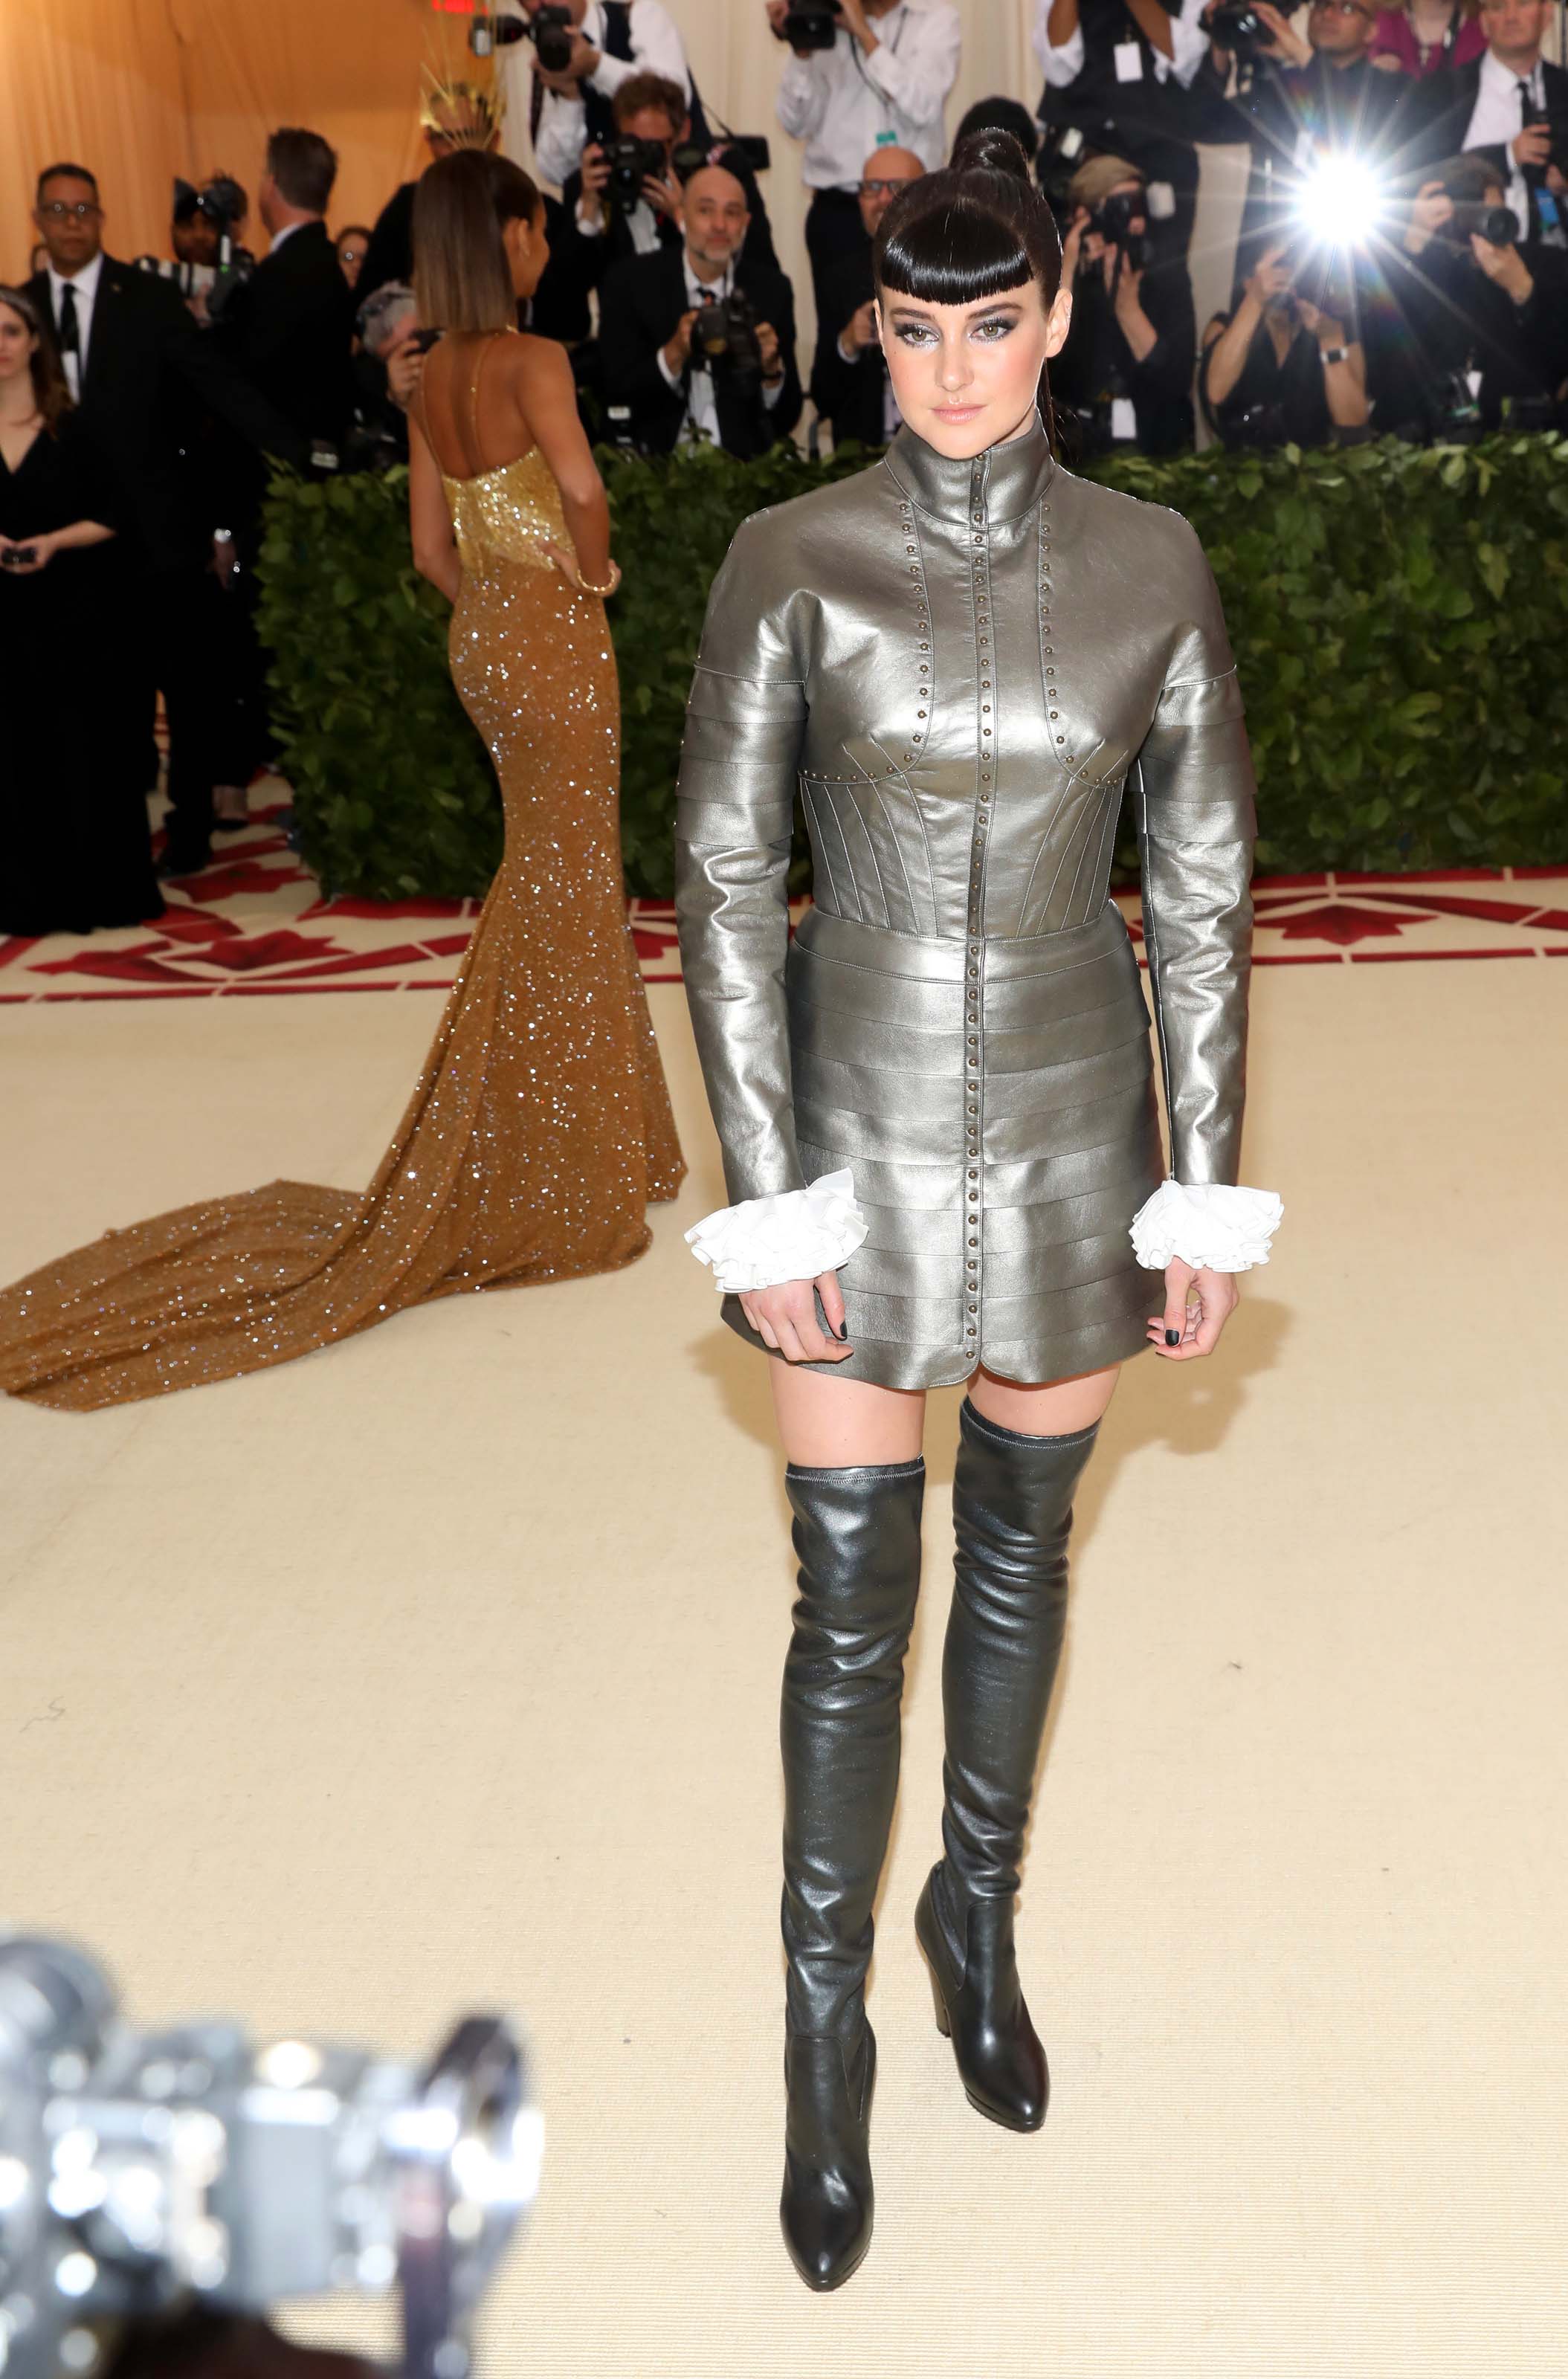 Shailene Woodley attends MET Costume Institute Gala